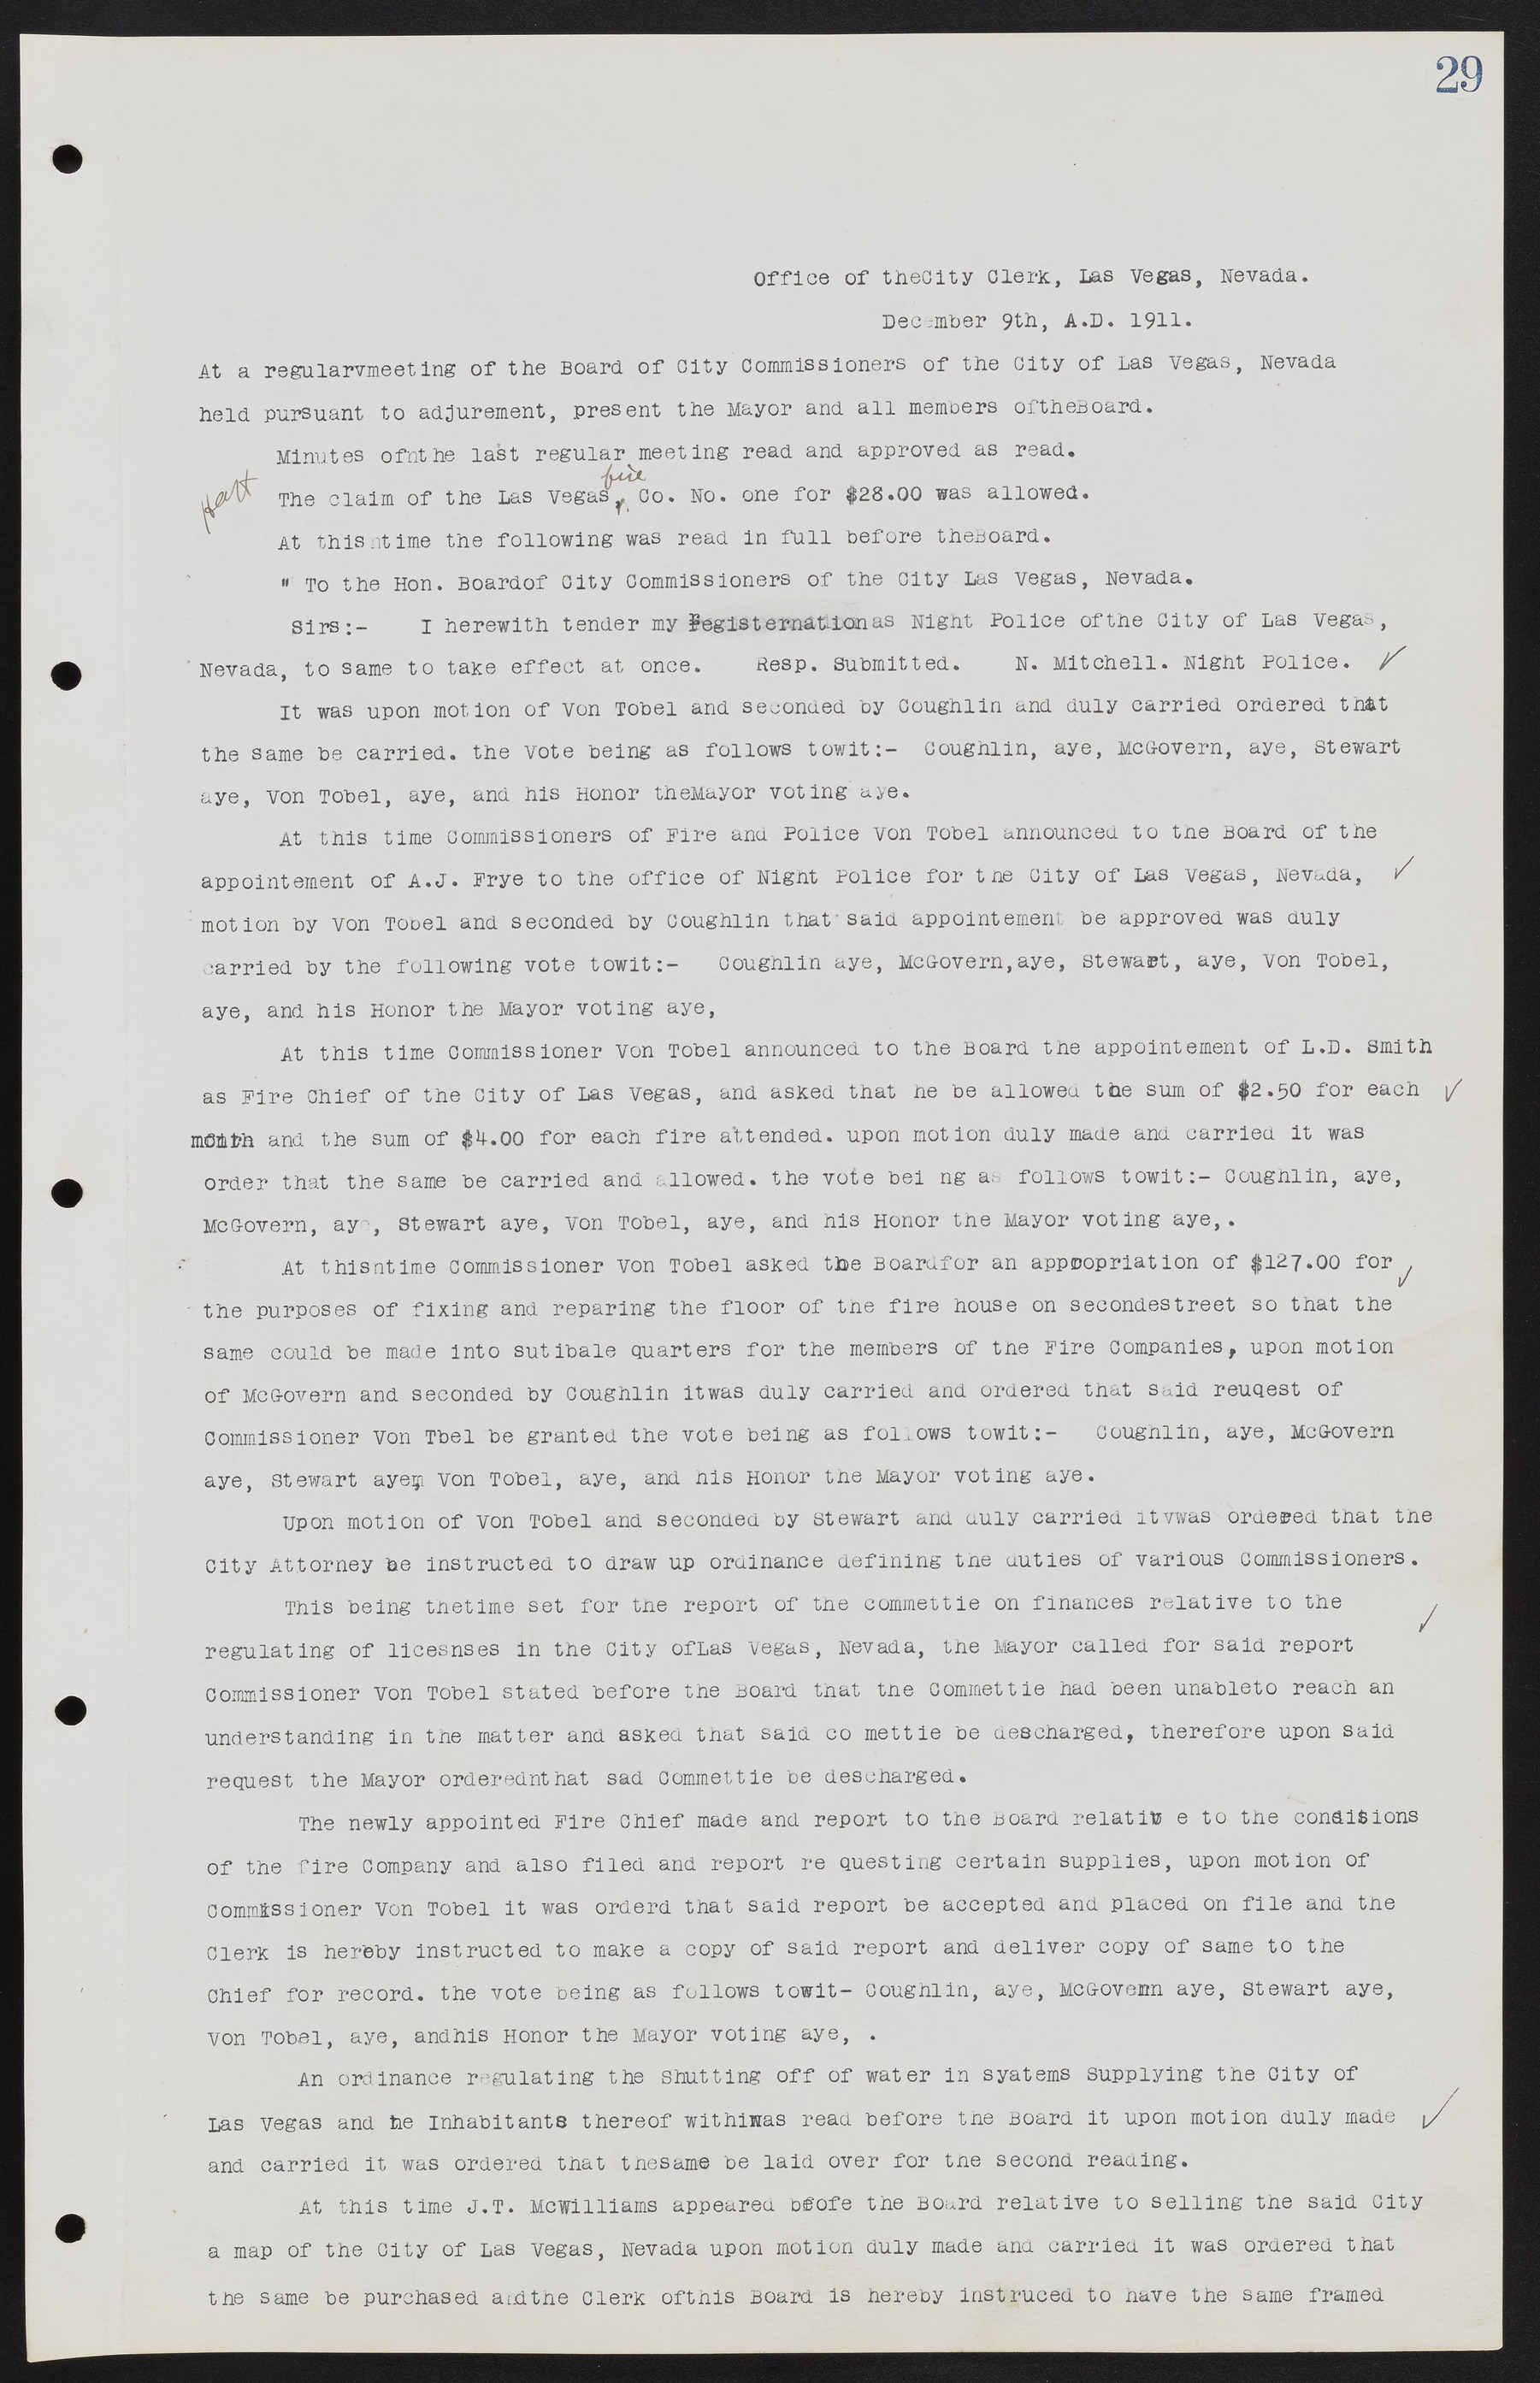 Las Vegas City Commission Minutes, June 22, 1911 to February 7, 1922, lvc000001-43